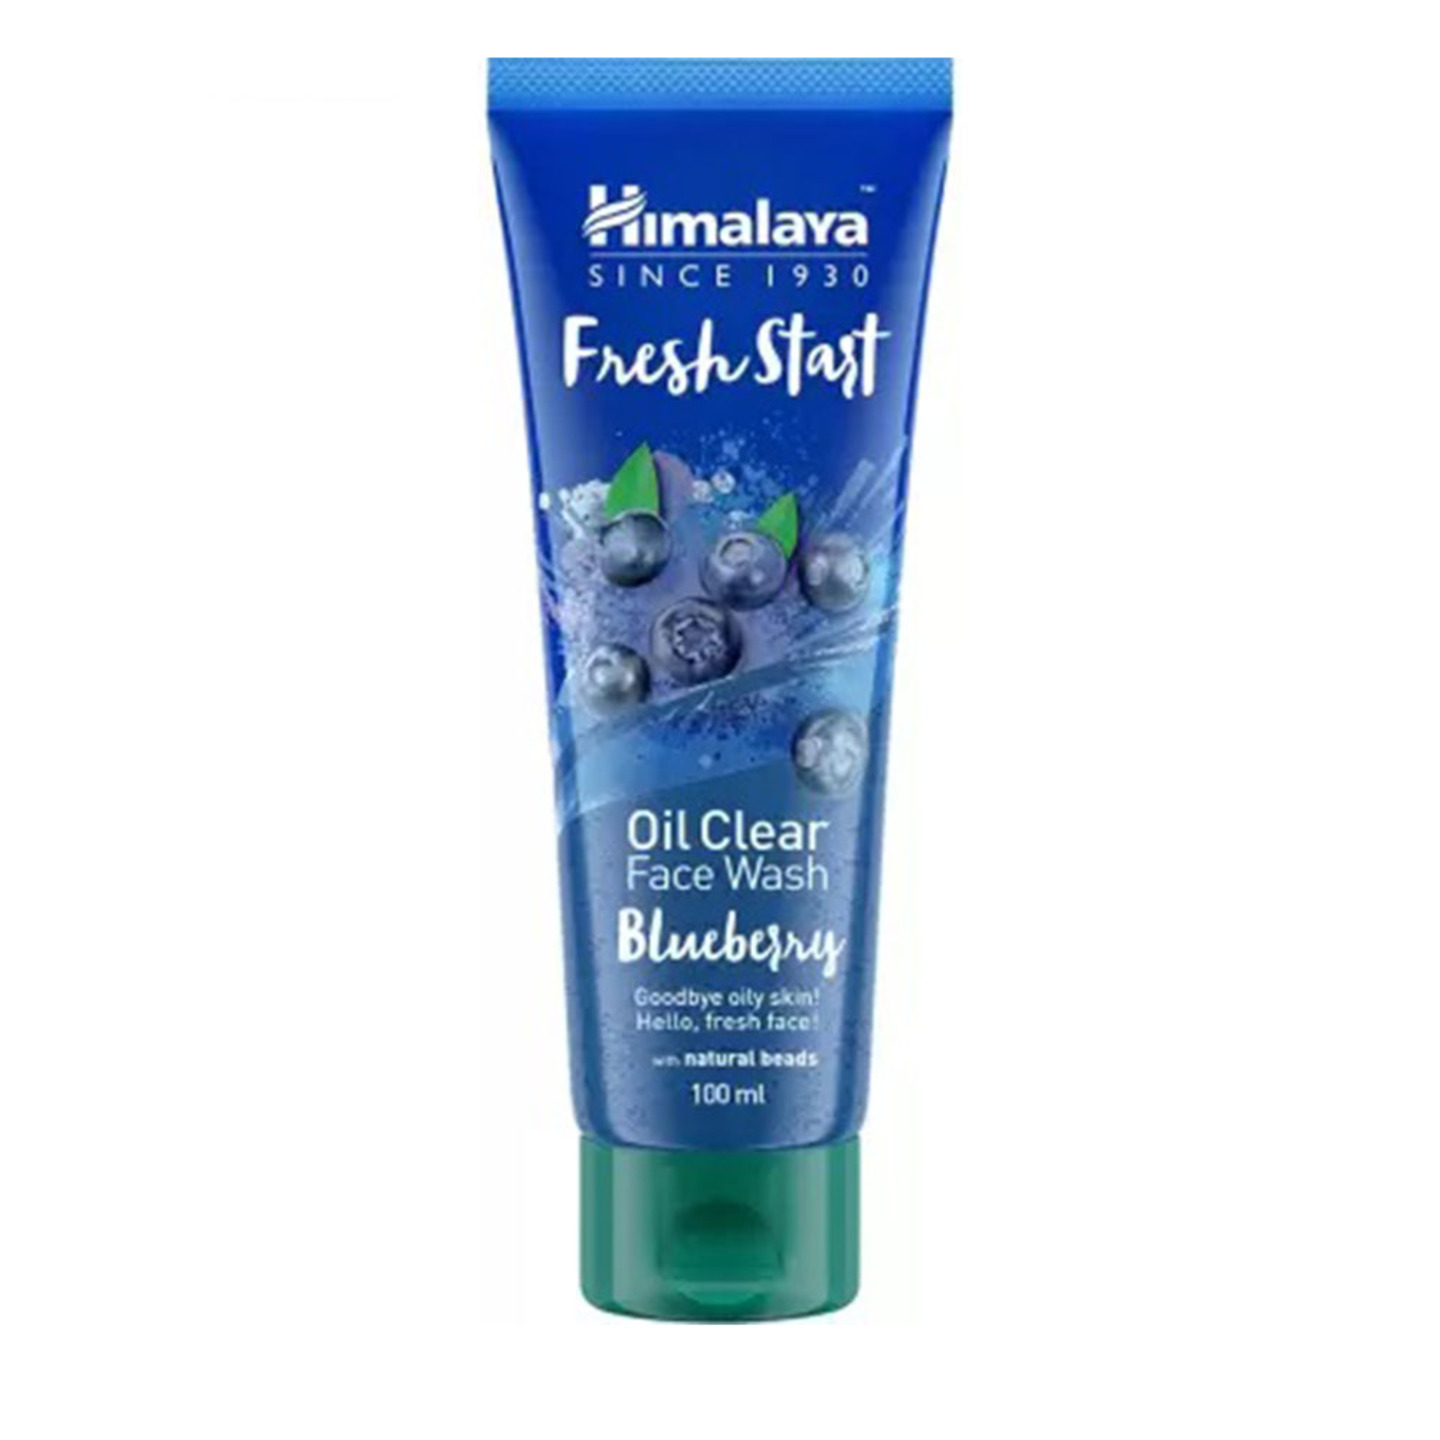 Fresh Start Oil Clear Face Wash Blueberry 100ml